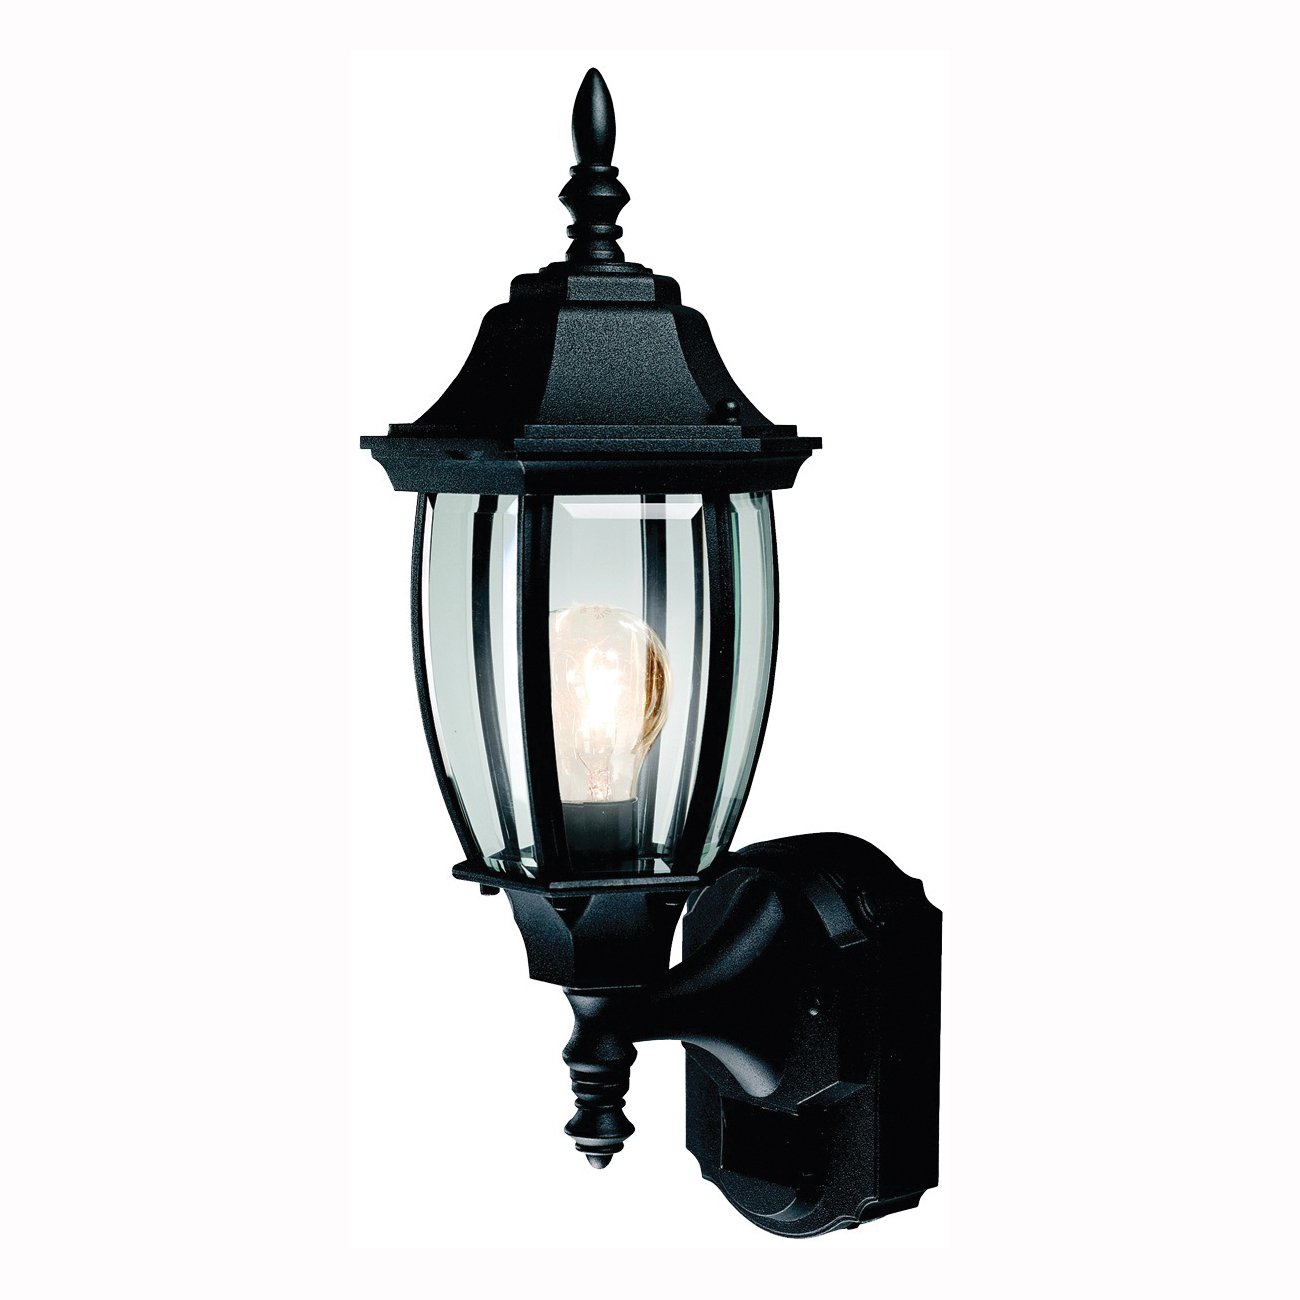 Dualbrite Series HZ-4192-BK Motion Activated Decorative Light, 120 V, 100 W, Incandescent Lamp, Black